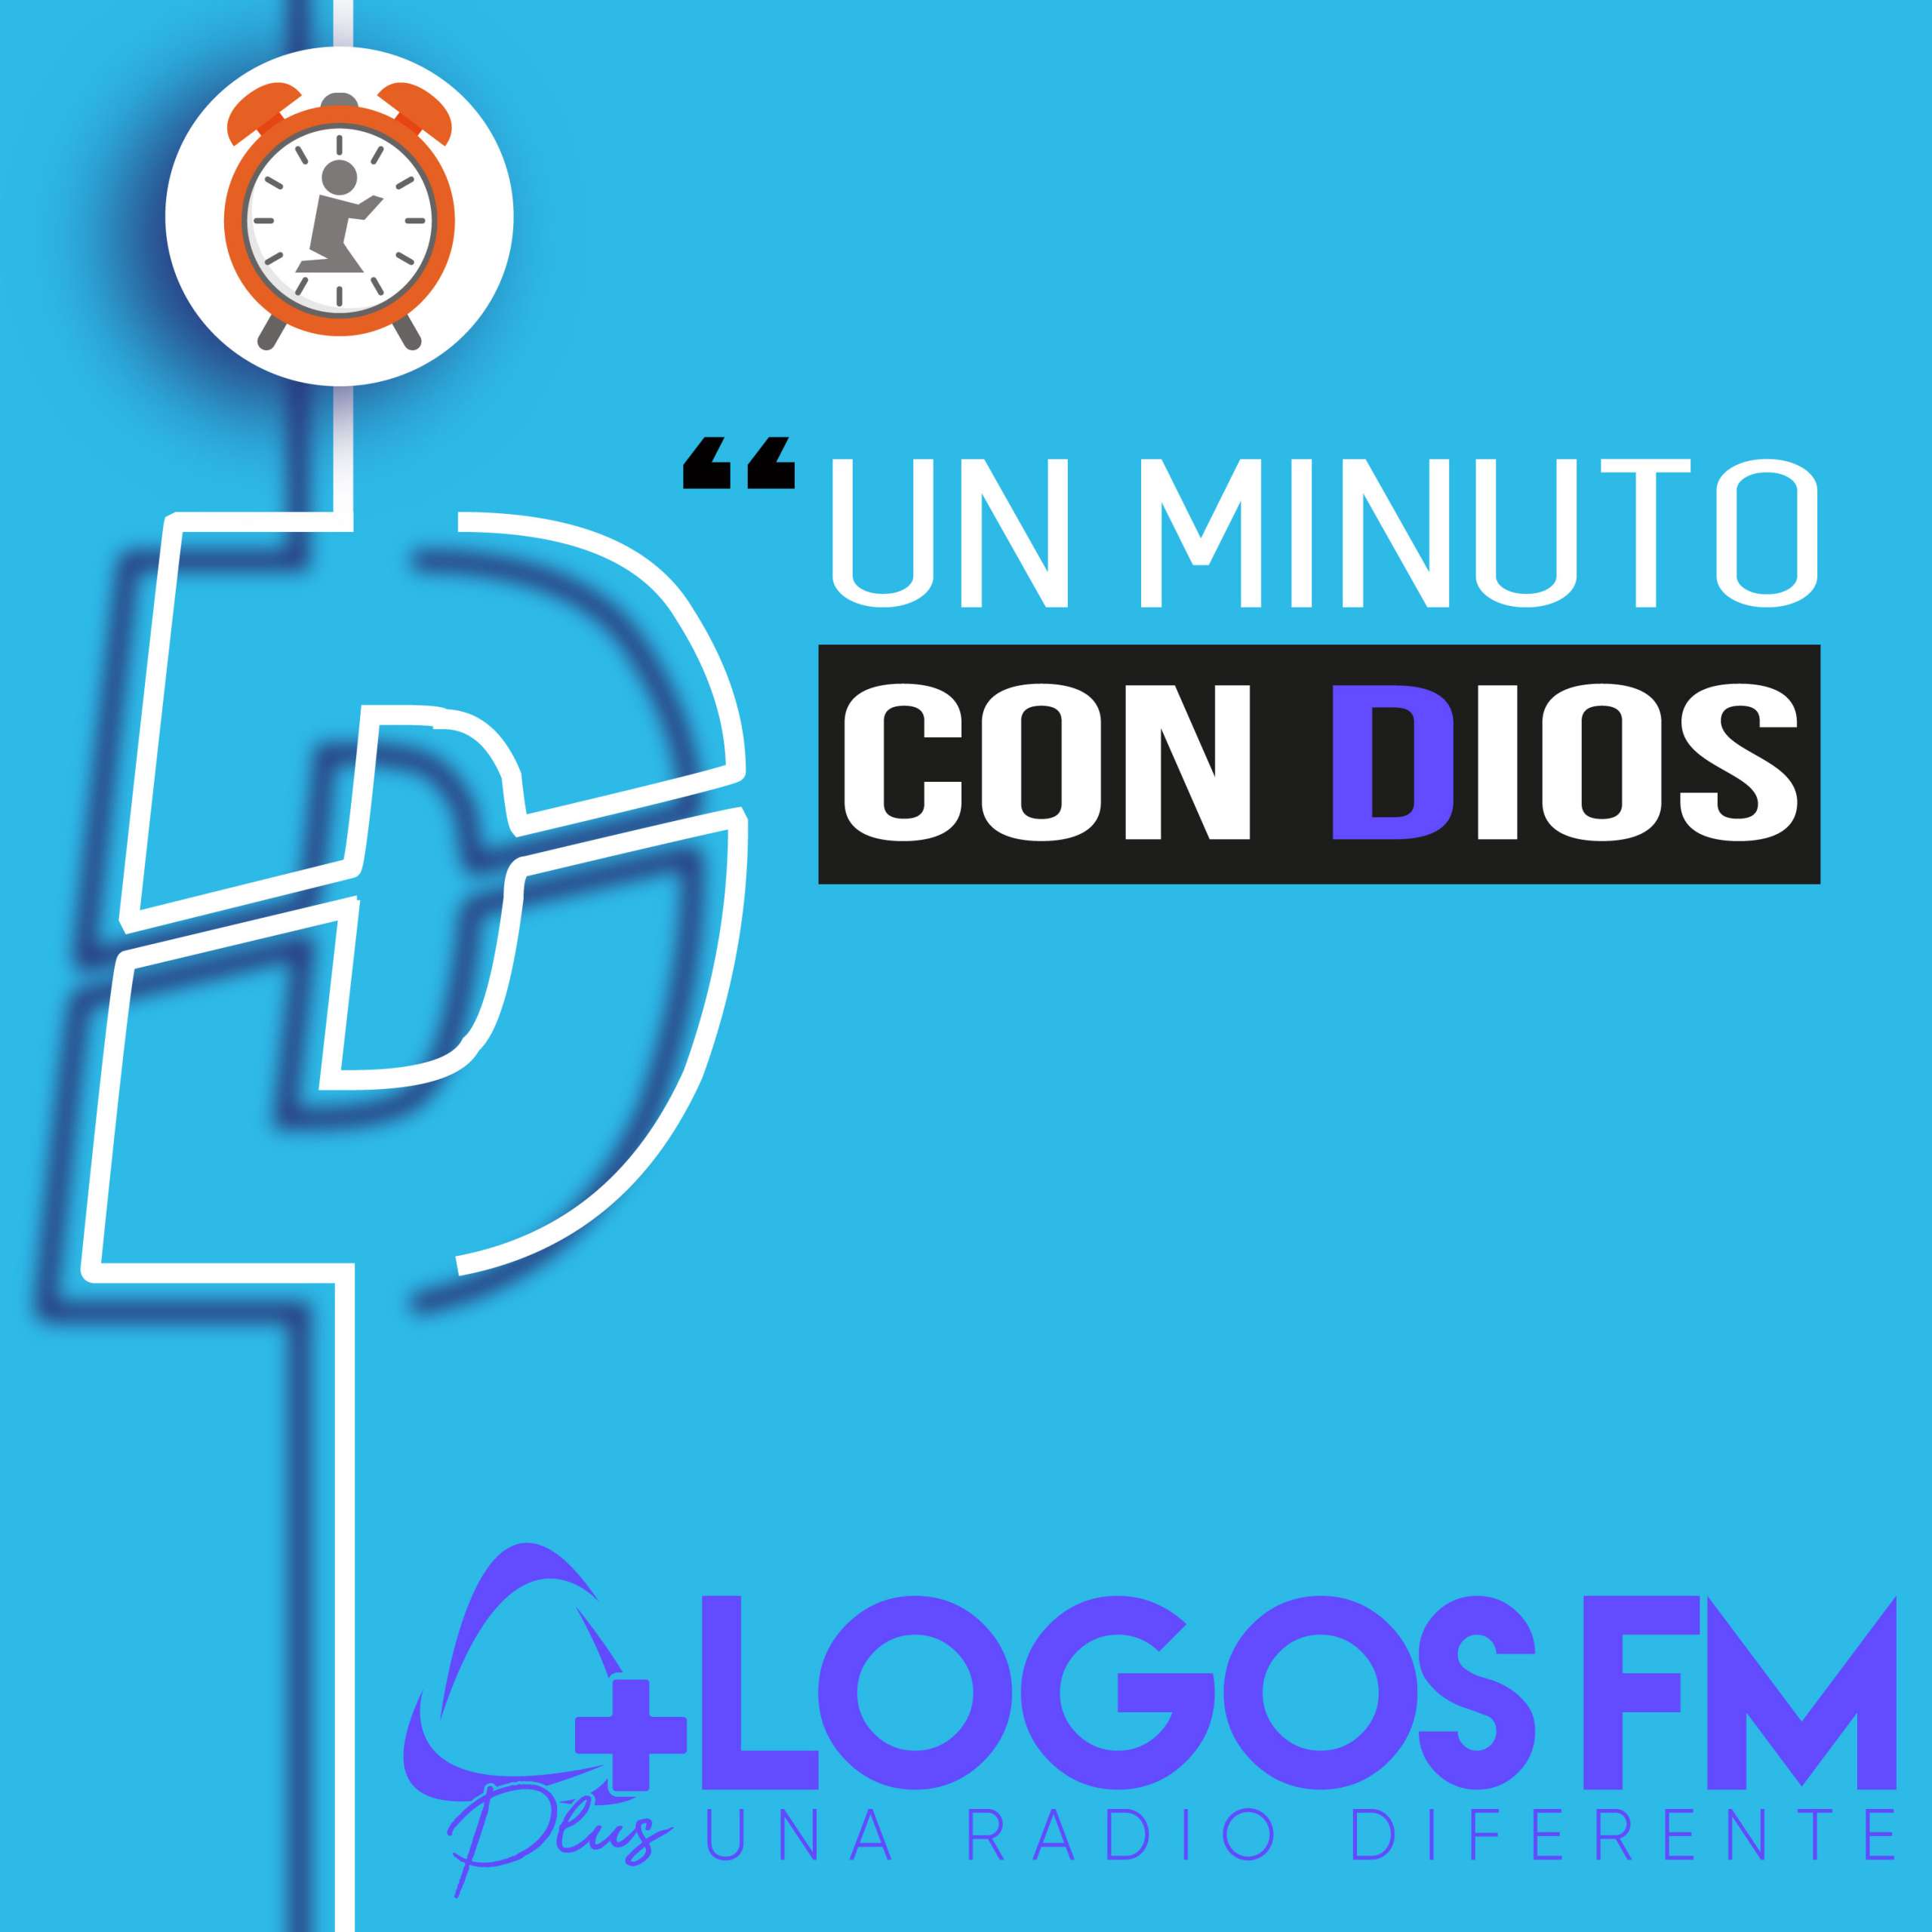 Un minuto con Dios - Episodio 380 - Loida Vargas